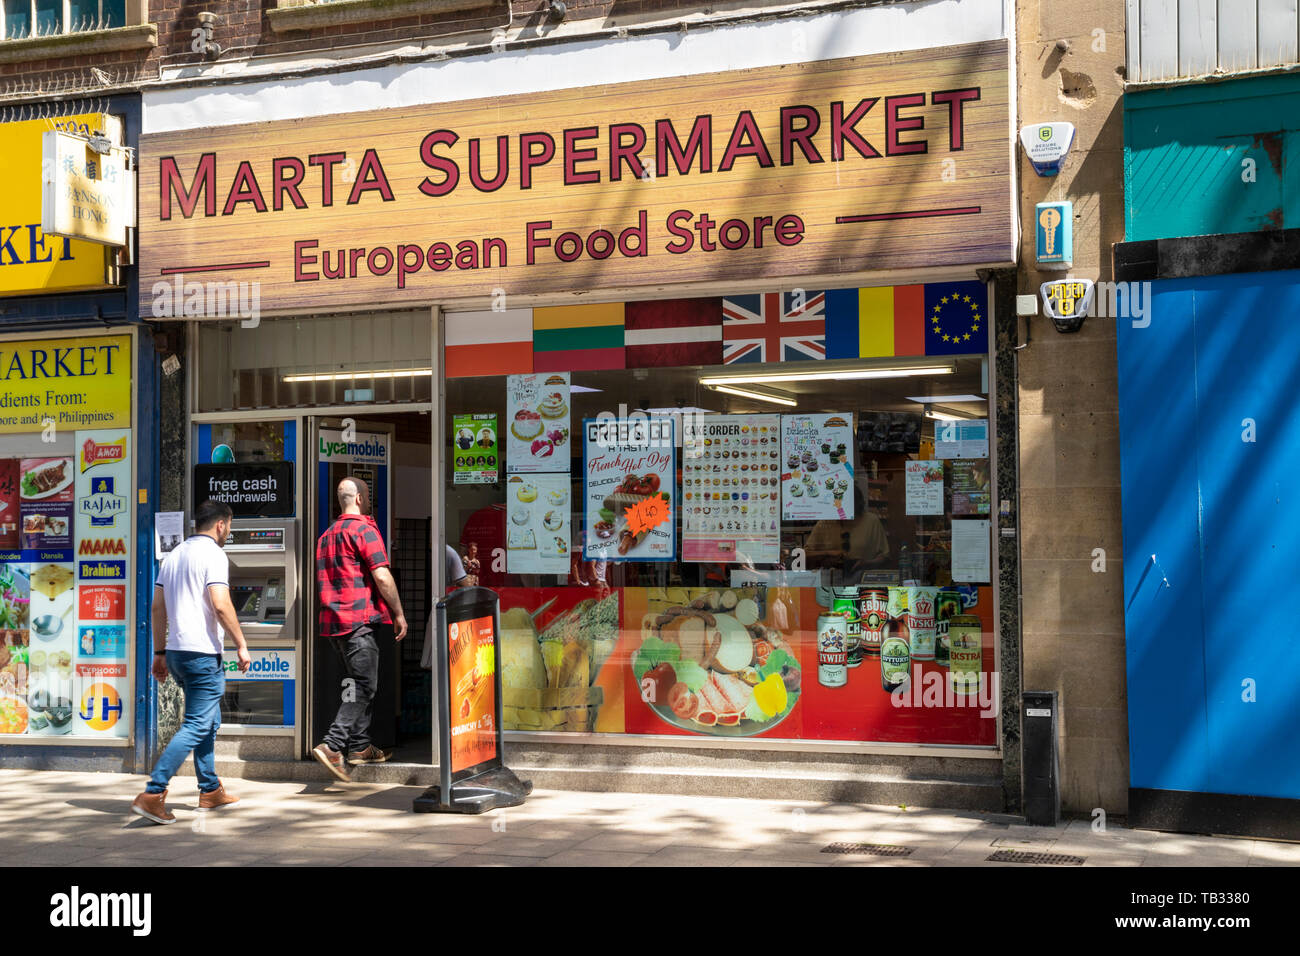 Peterborough UK Marta supermercato negozio alimentare europeo, supermercato alimentare europeo, Bridge Street Peterborough Cambridgeshire Inghilterra uk gb Europa Foto Stock